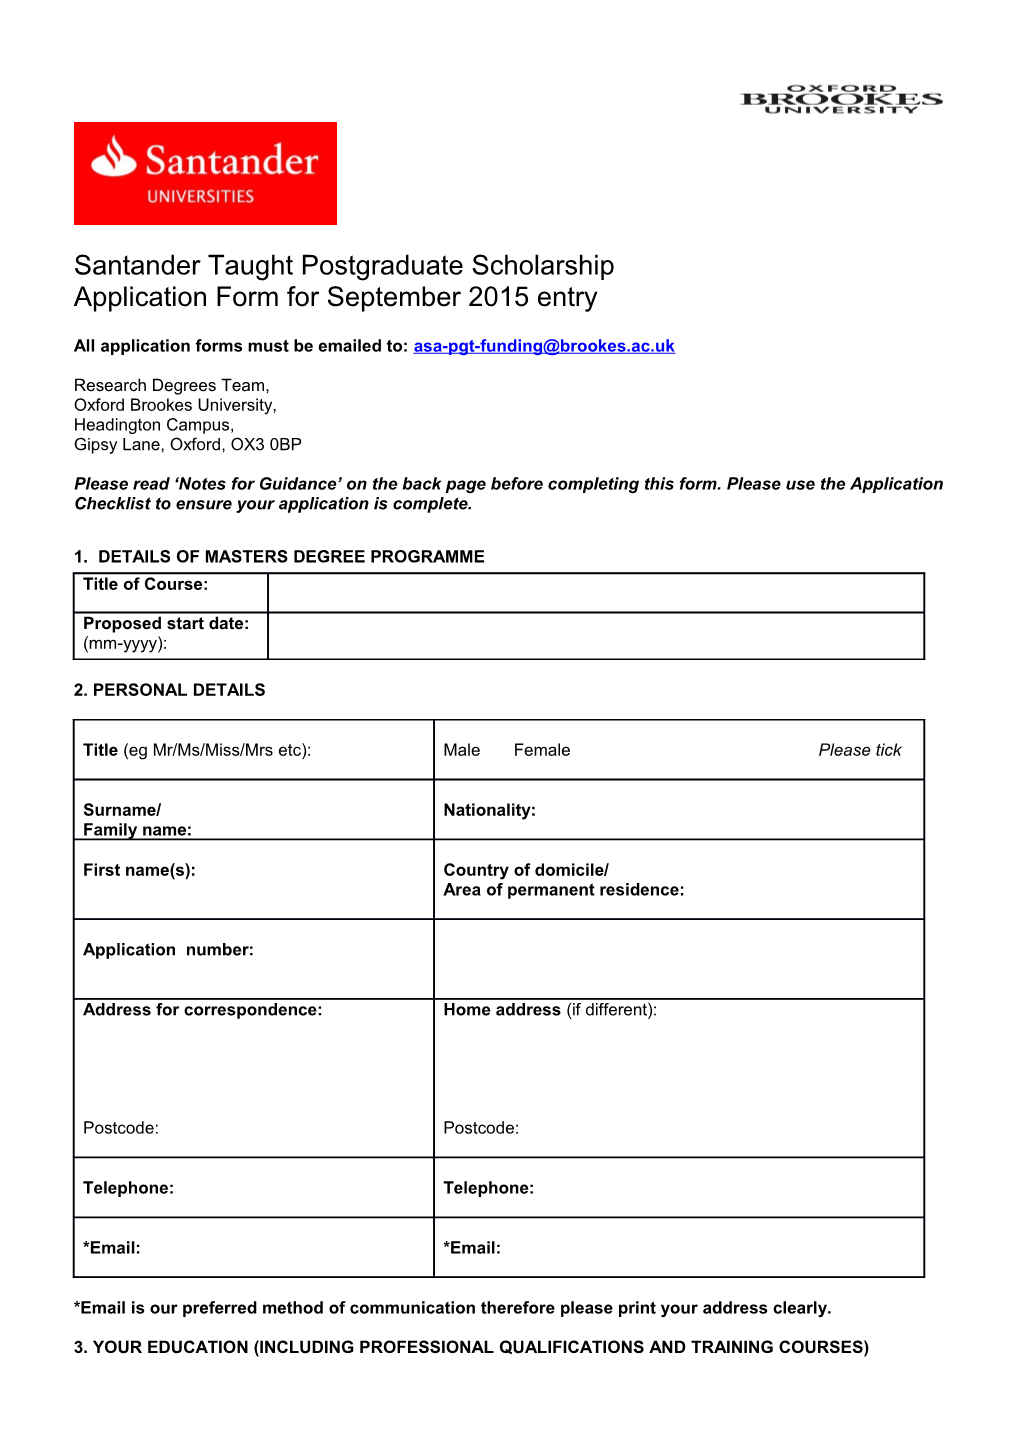 Santander Taught Postgraduate Scholarship